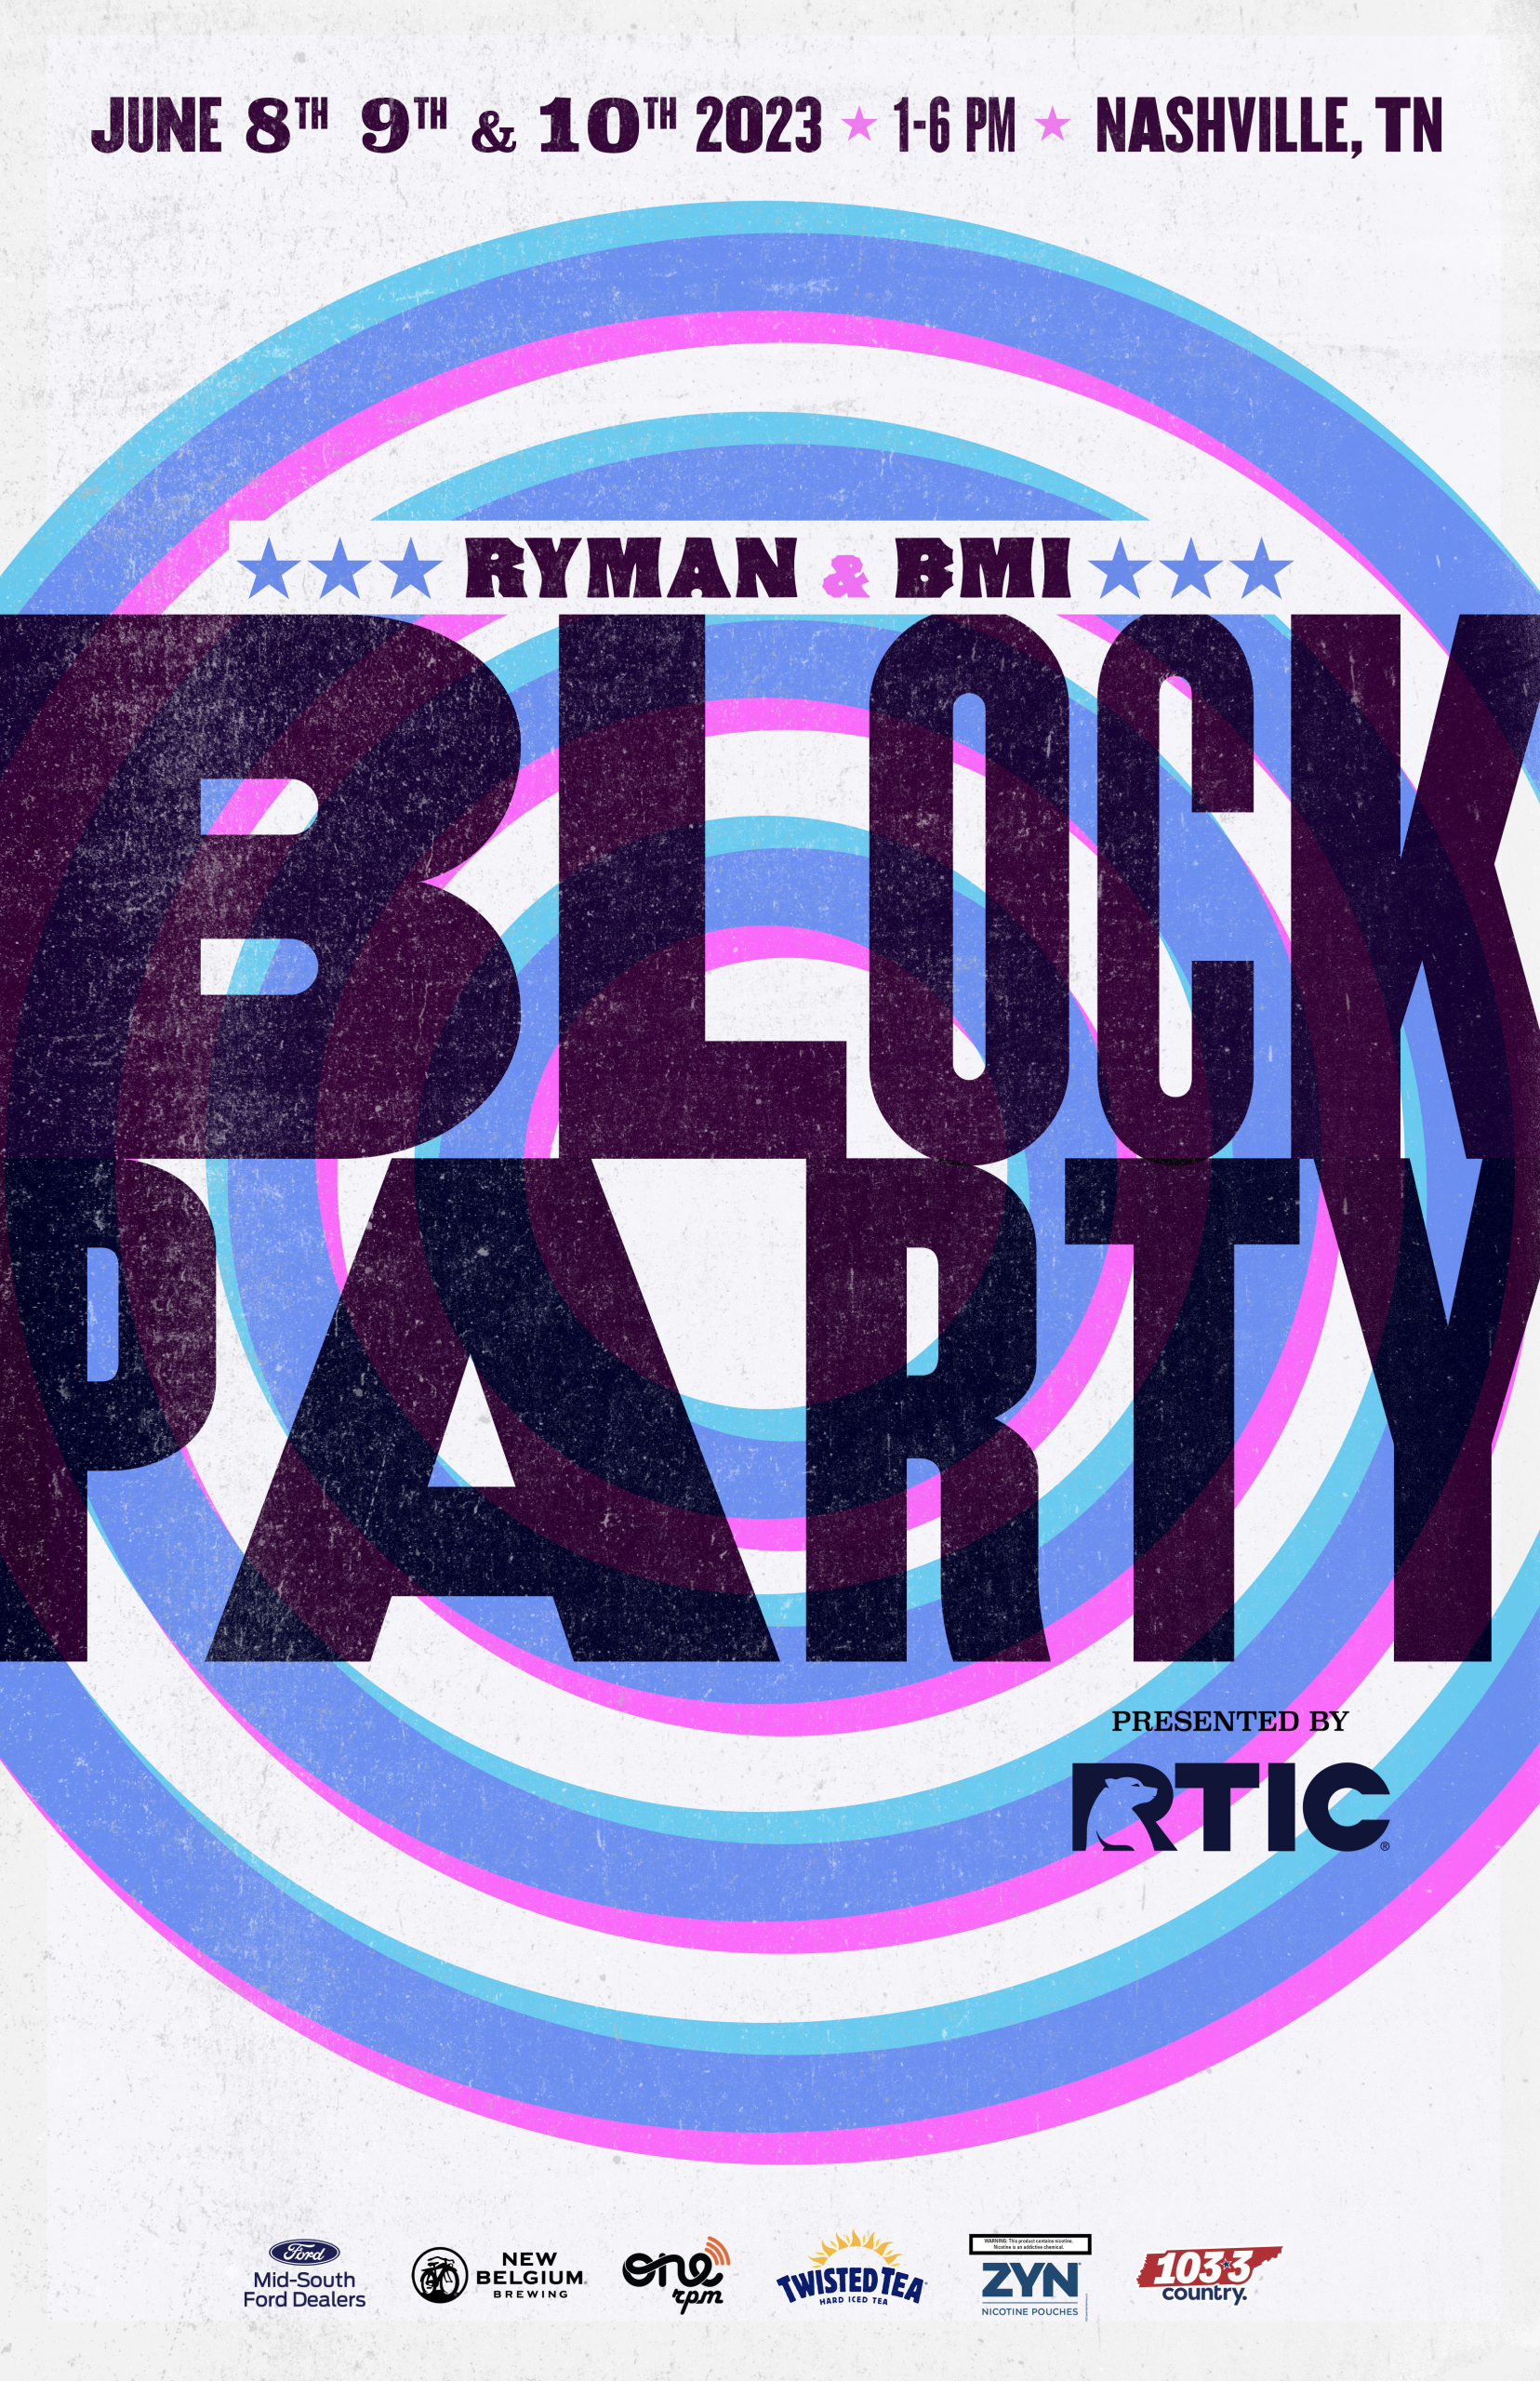 6/8 – 6/10 – Ryman & BMI Block Party